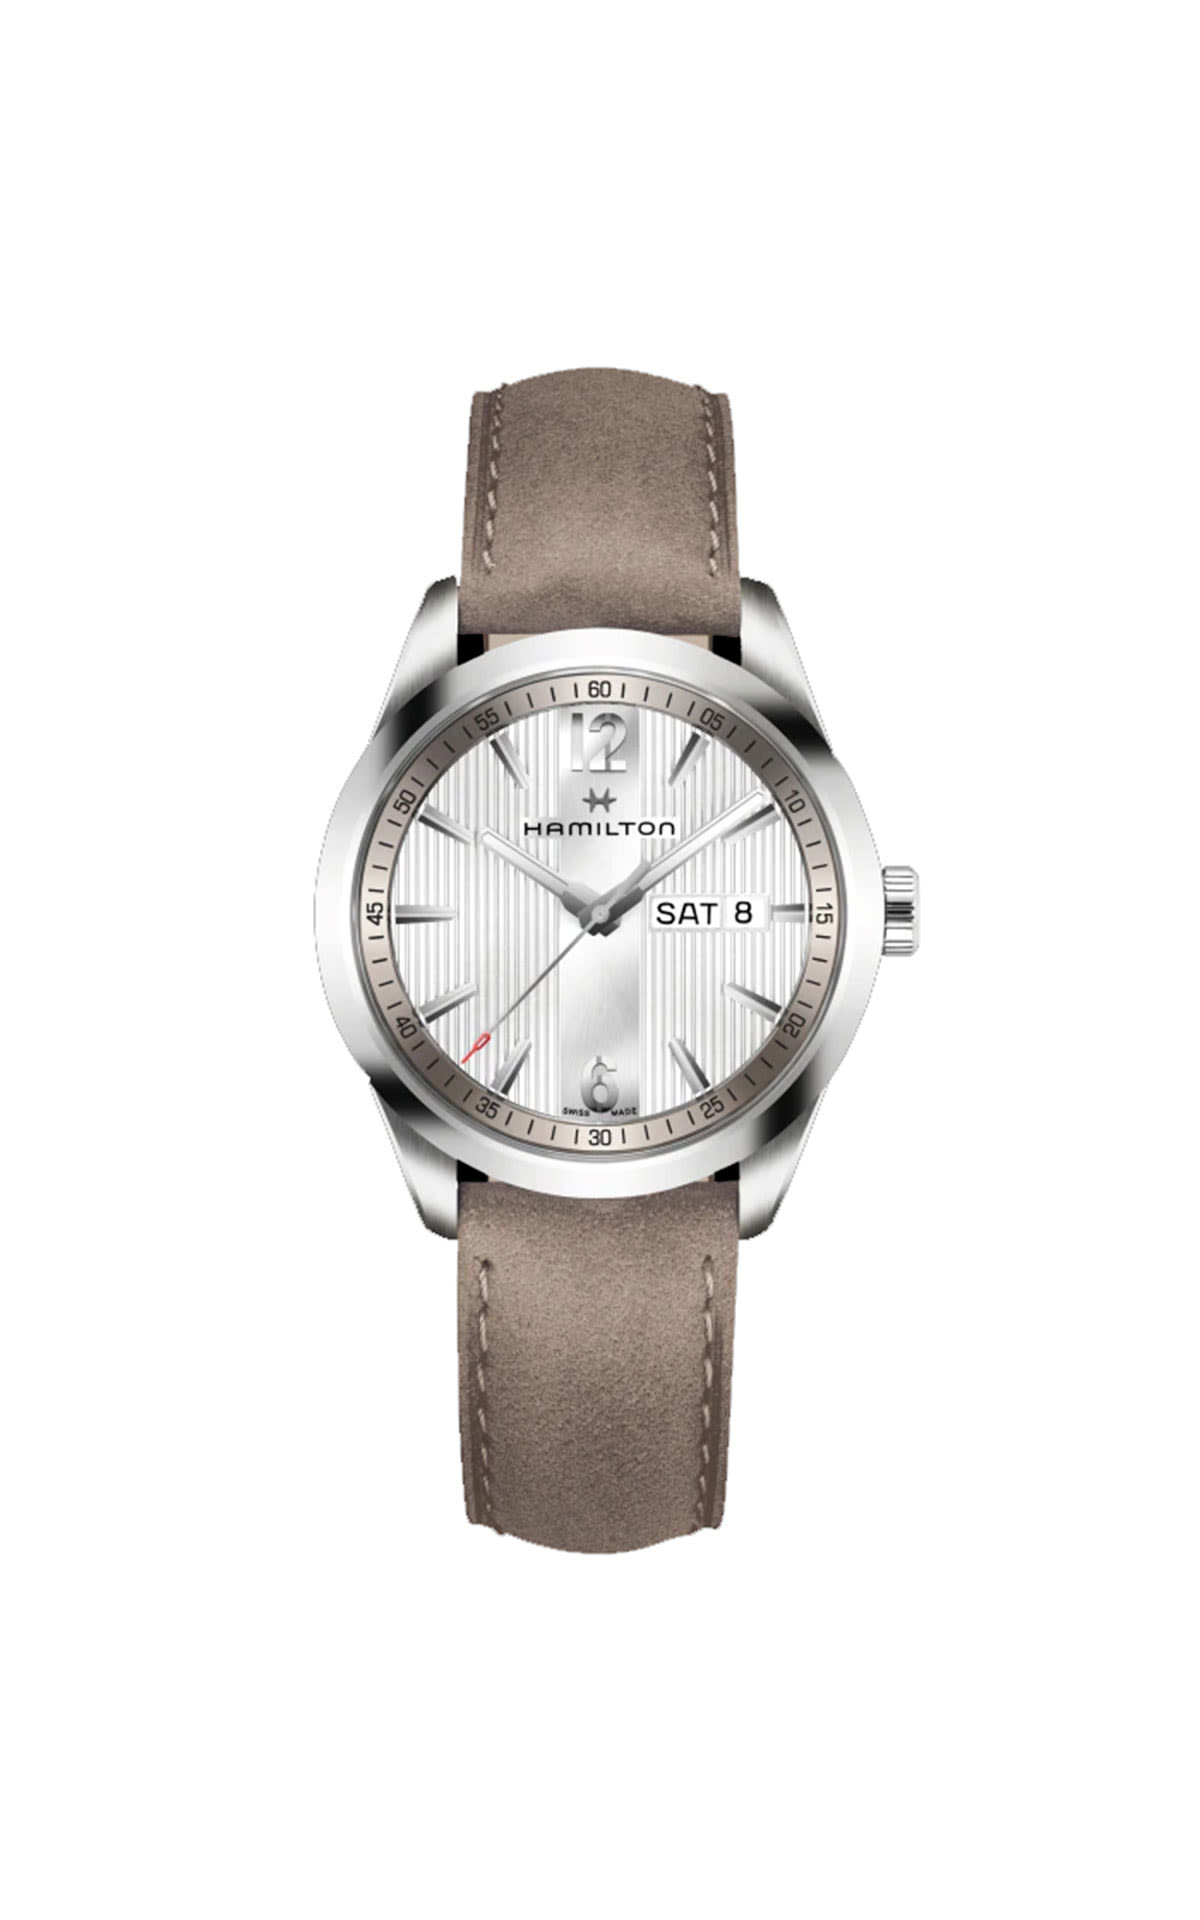 Hamilton brown strap watch